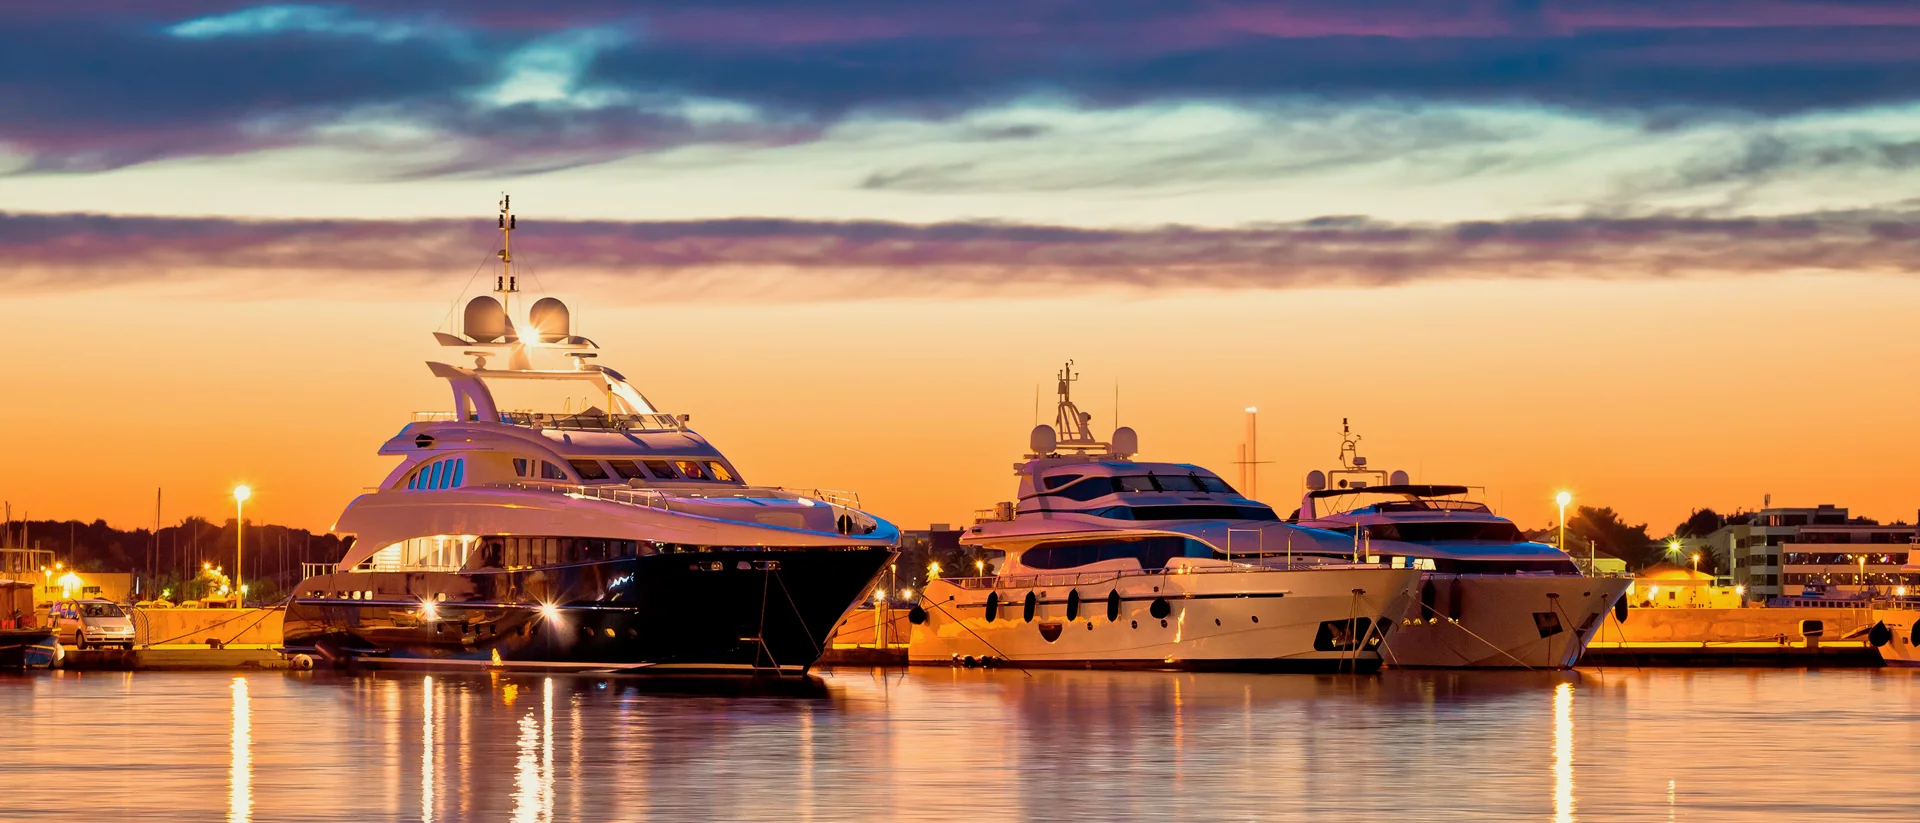 Yachtcharter Bretagne, Sonnenuntergang im Hafen